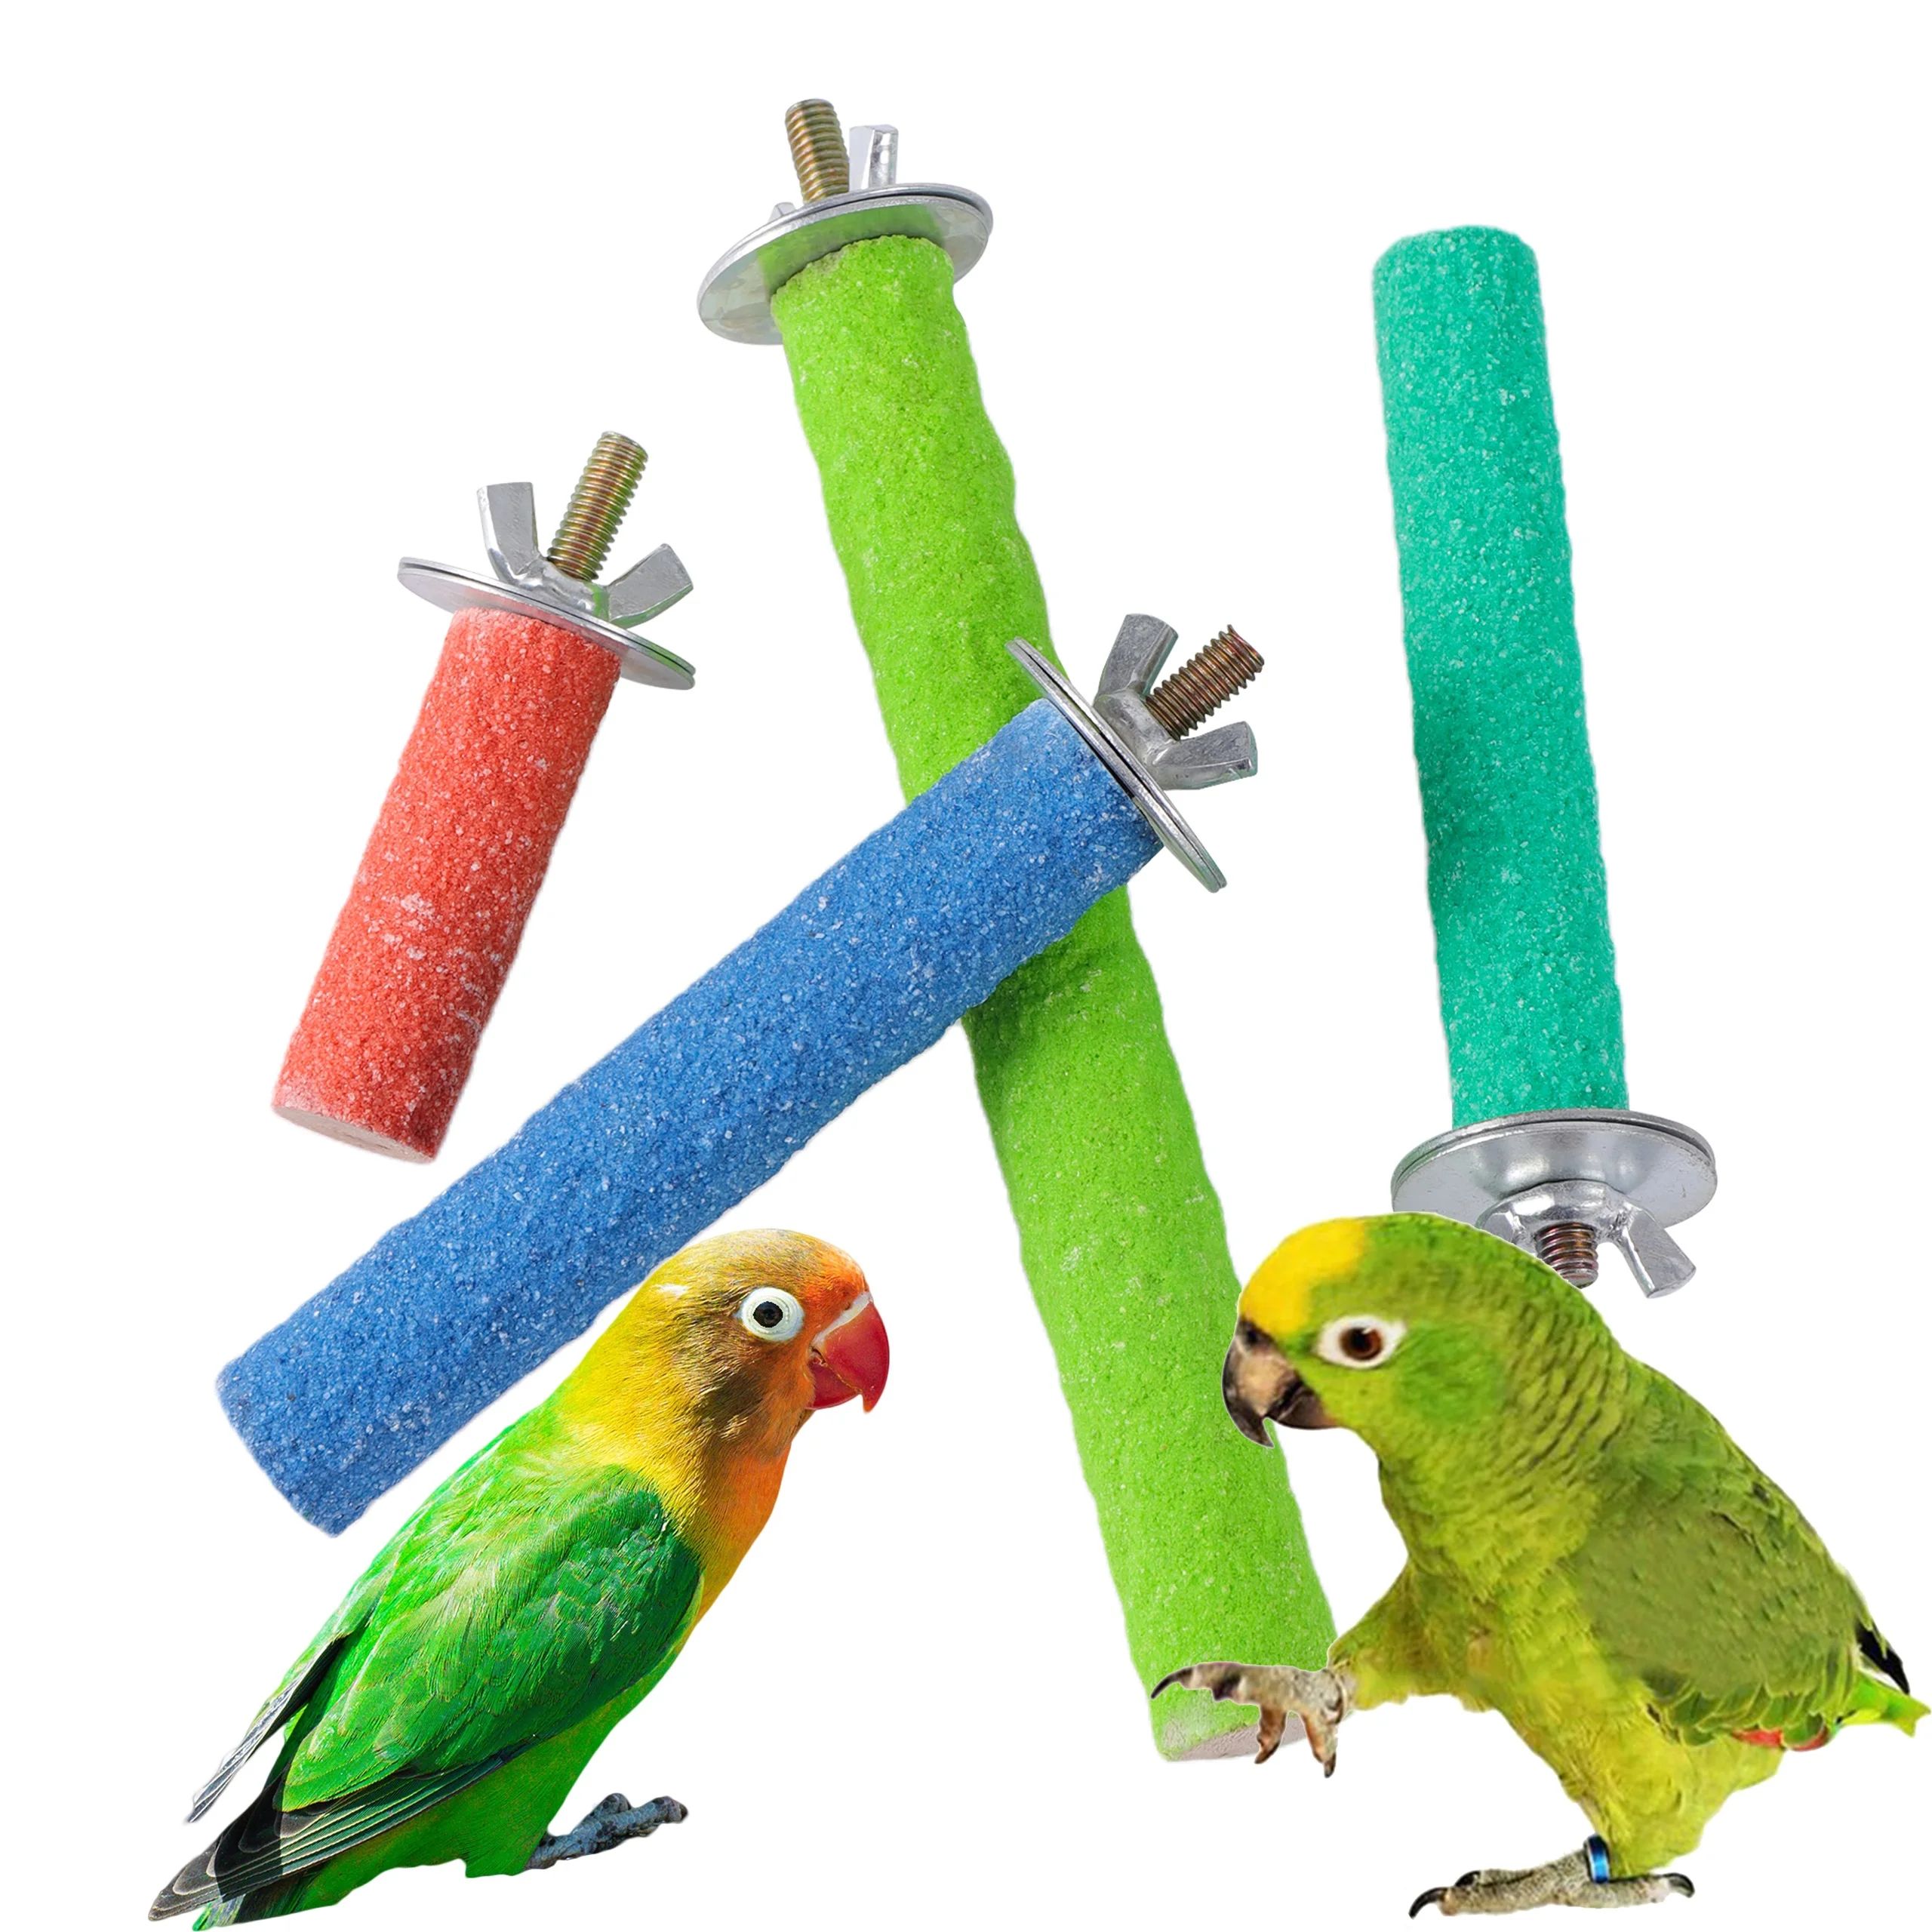 rd Molar Stick Grinding Bird Claw Cage Toy Pet Bird Supplies